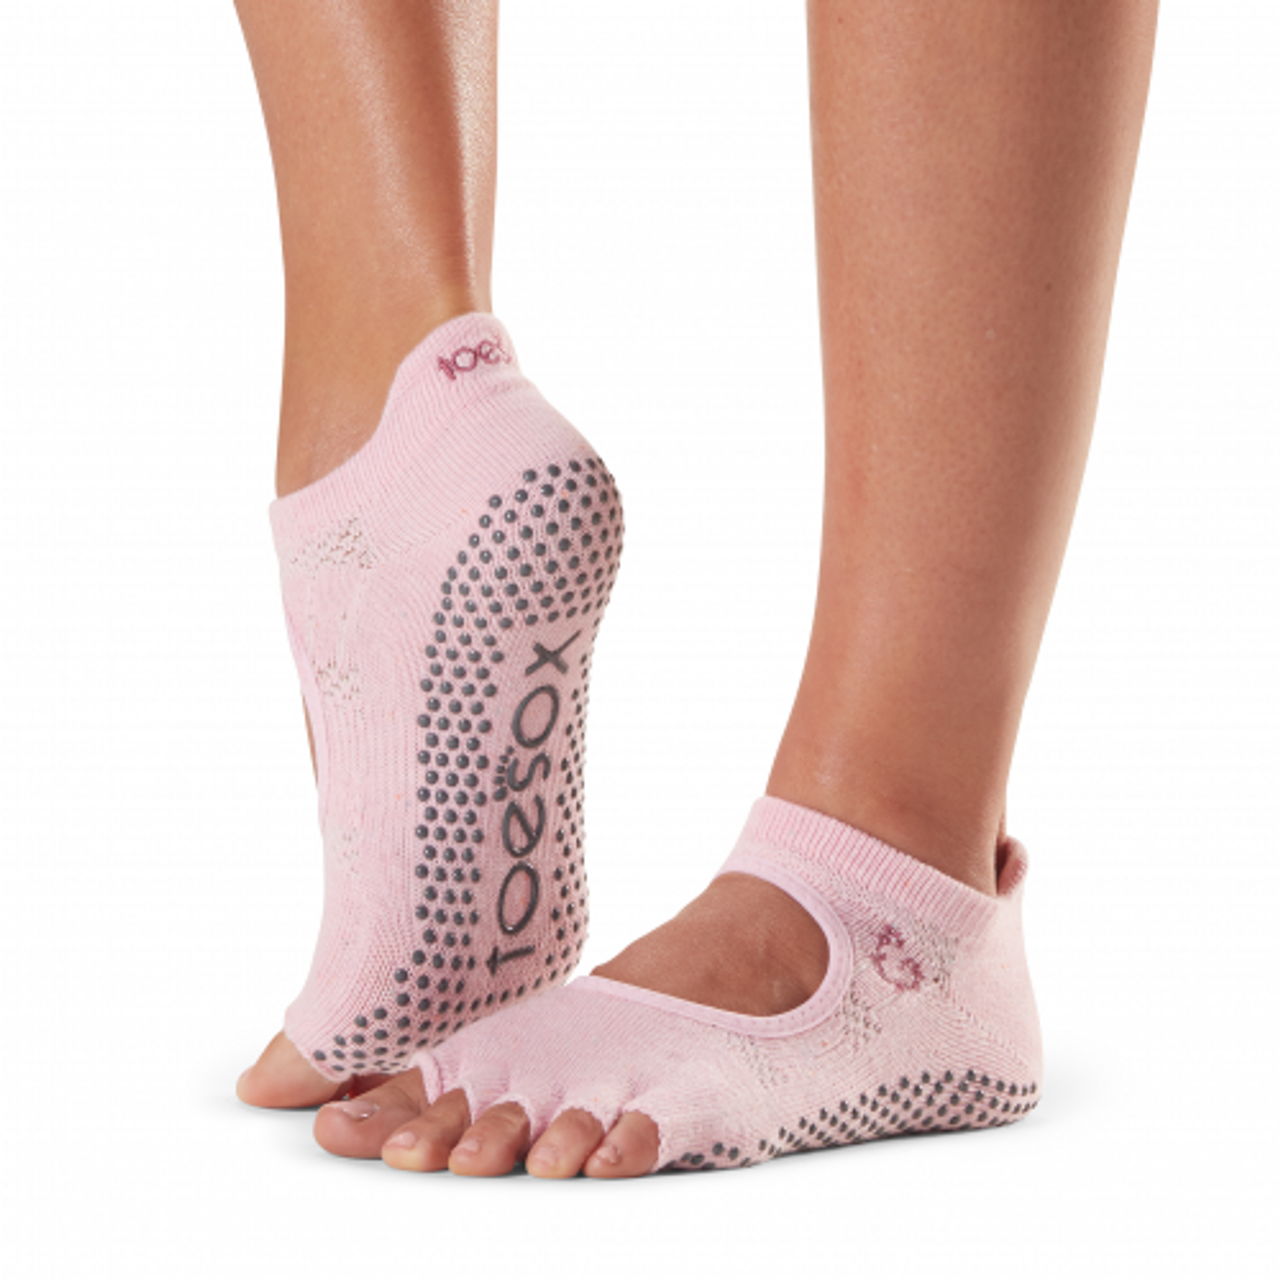 ToeSox Half Toe Bellarina - Grip Socks In Baja - NG Sportswear  International LTD